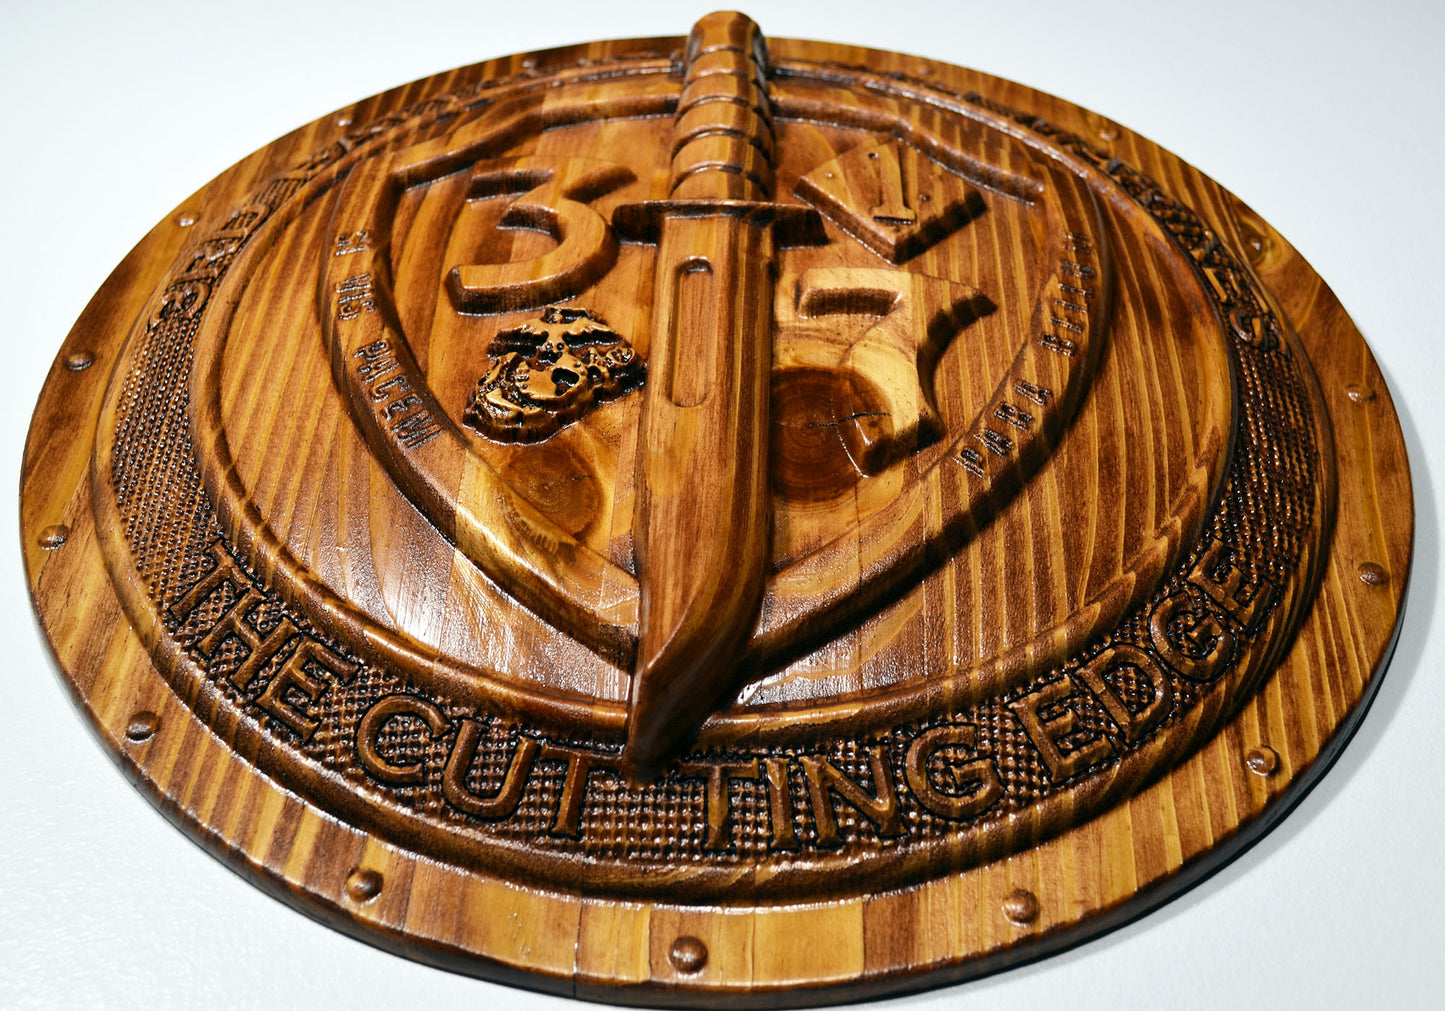 USMC 3rd Battalion 7th Marines, USMC The Cutting Edge 3d wood carving, military plaque